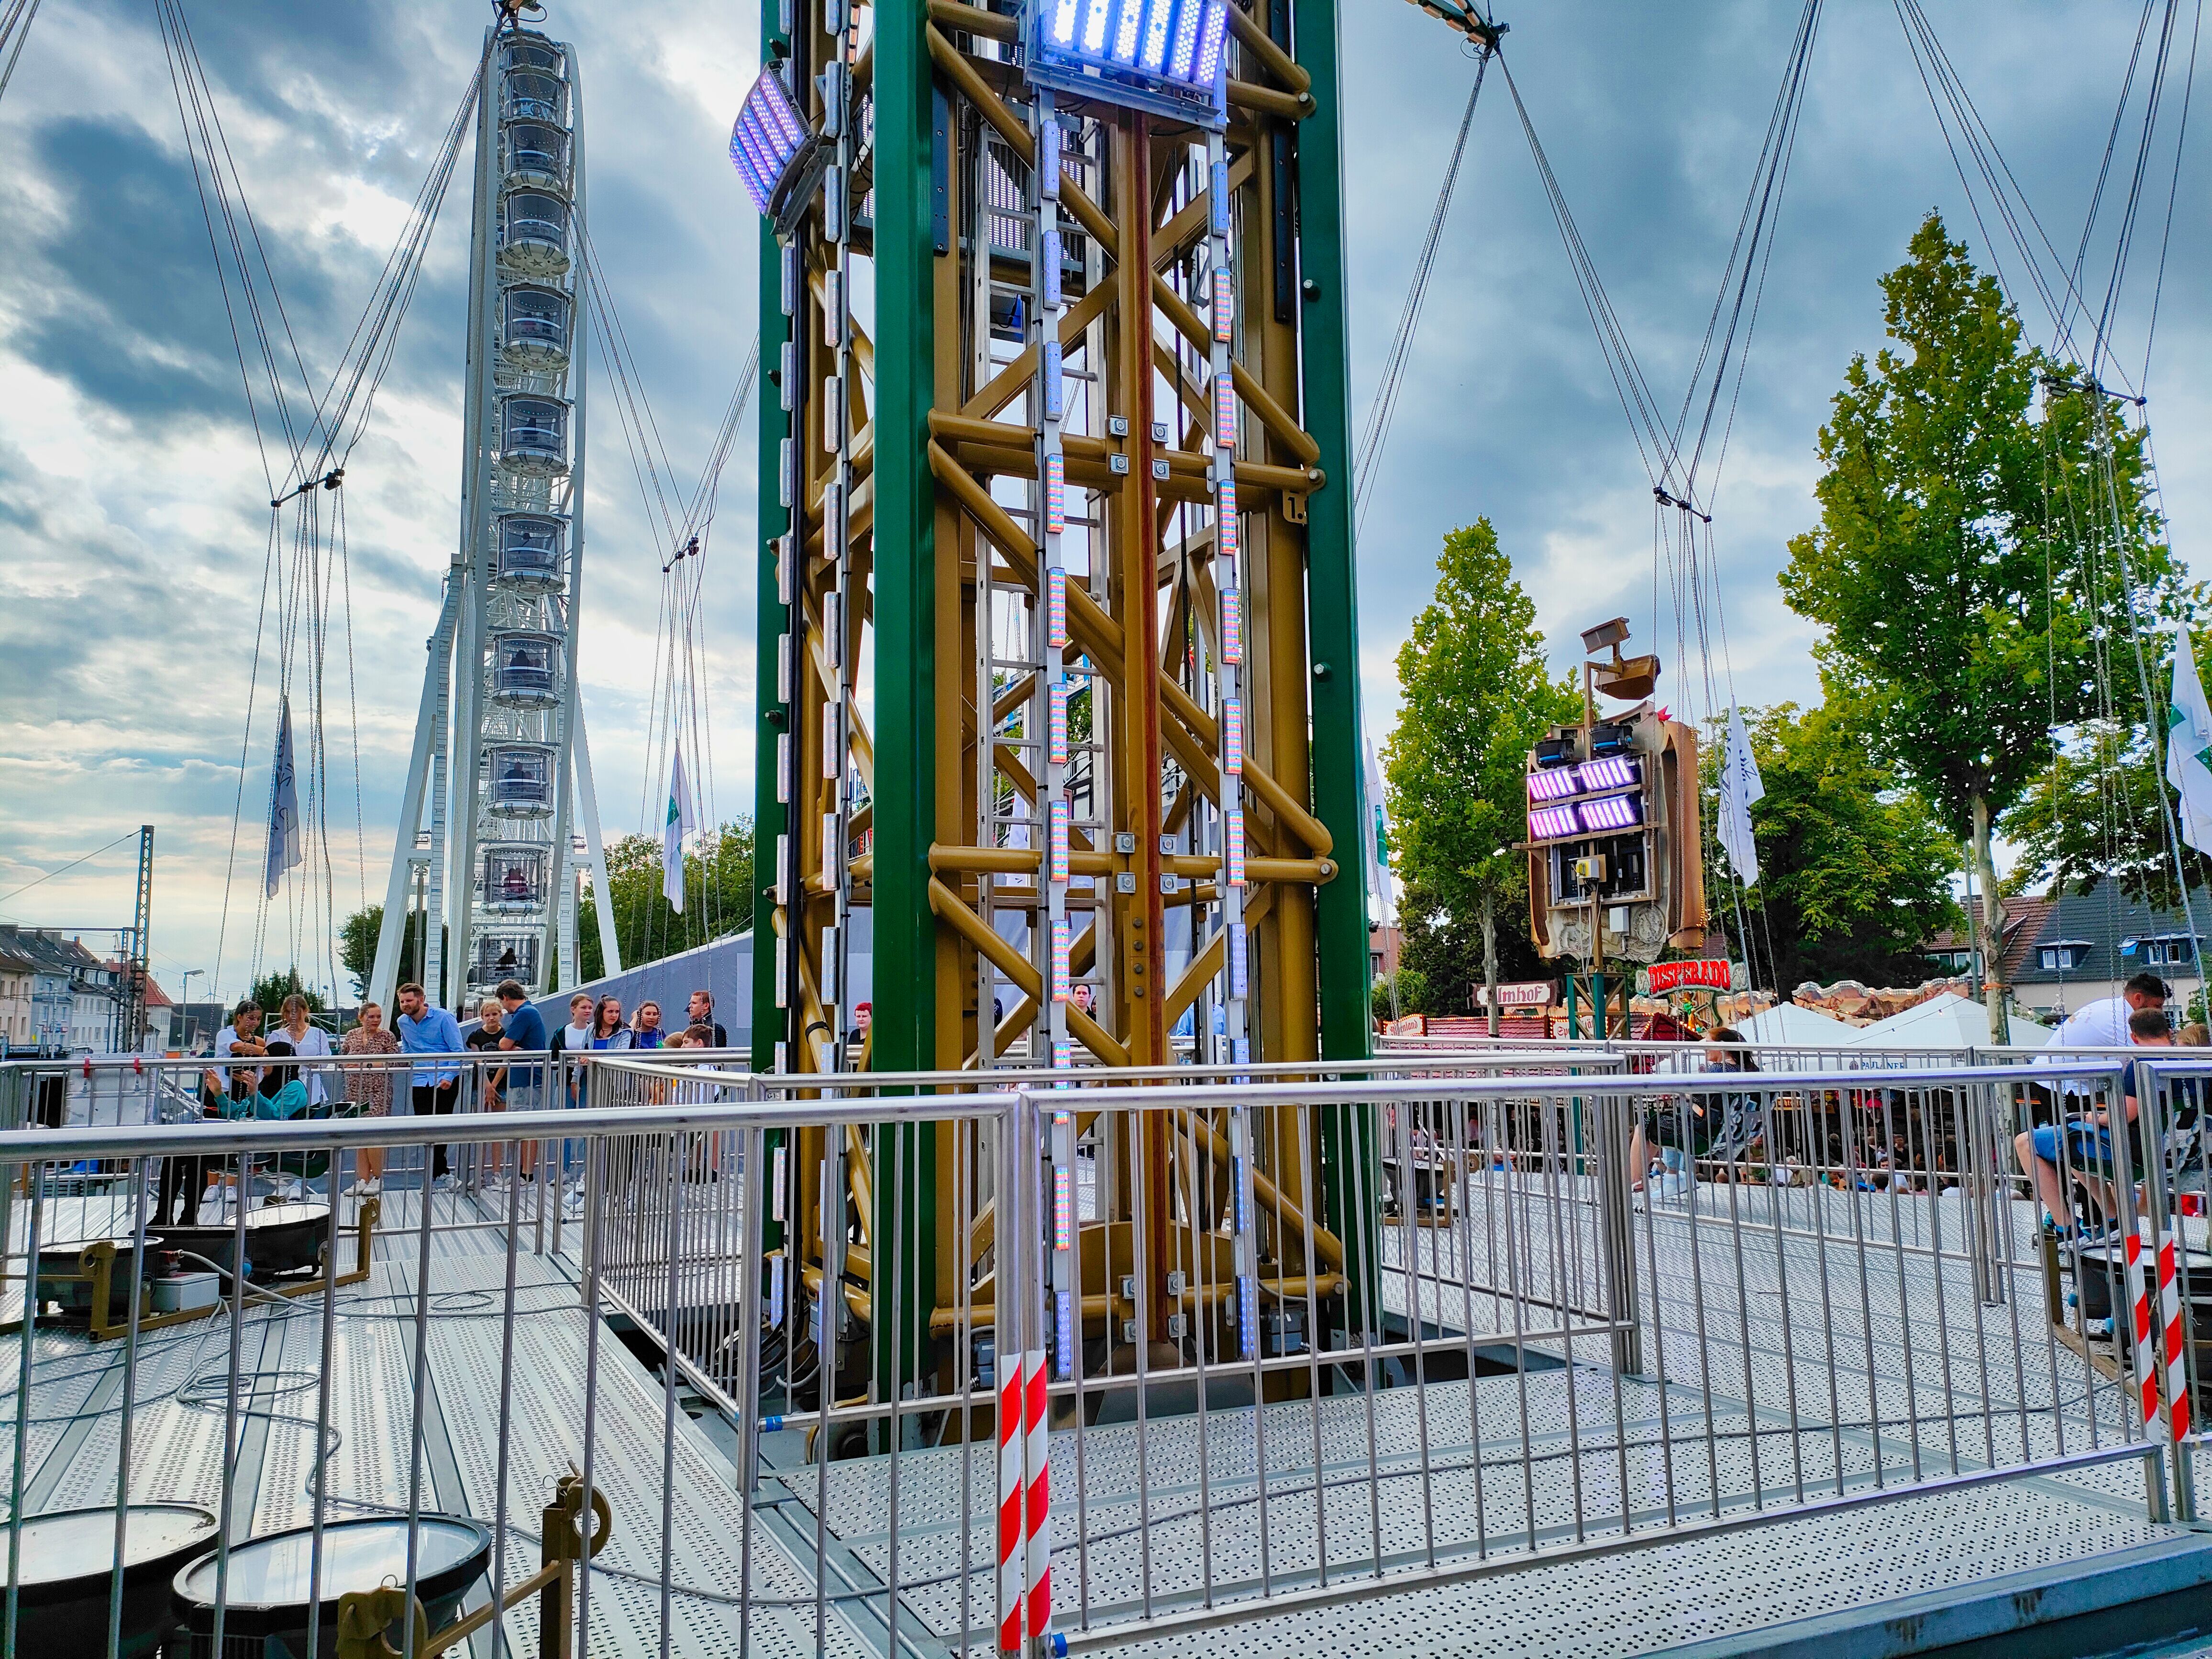 Plattform vom Jules Verne Tower mit dem Stahlgerüst des Towers.
